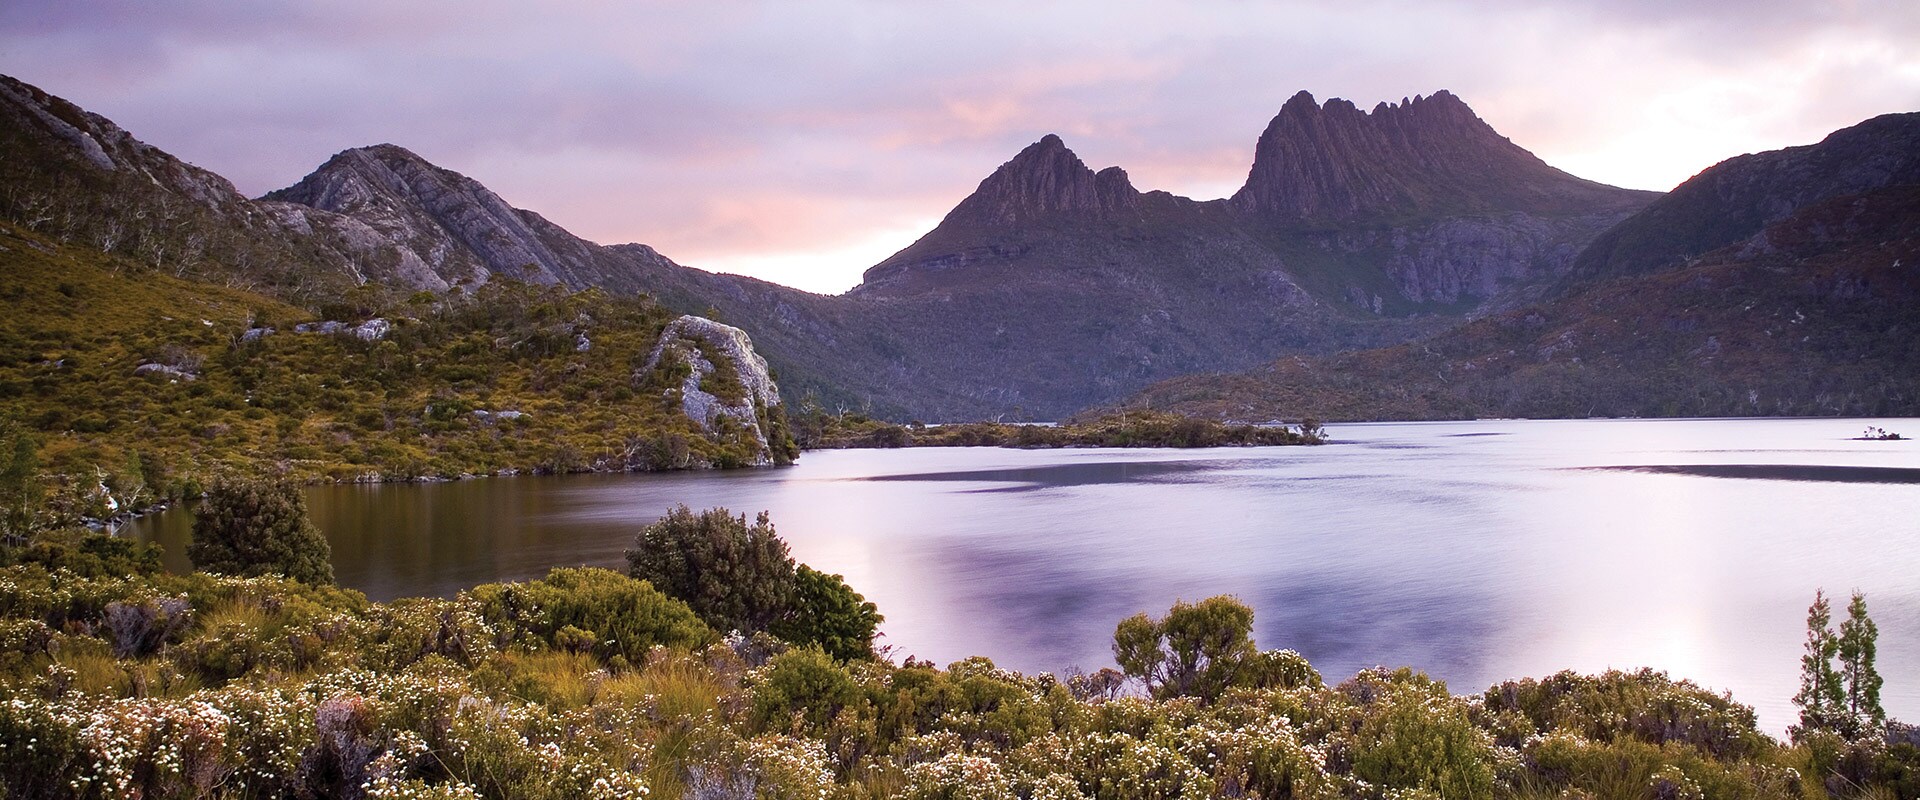 cradle mountain dove lake sunset tasmania